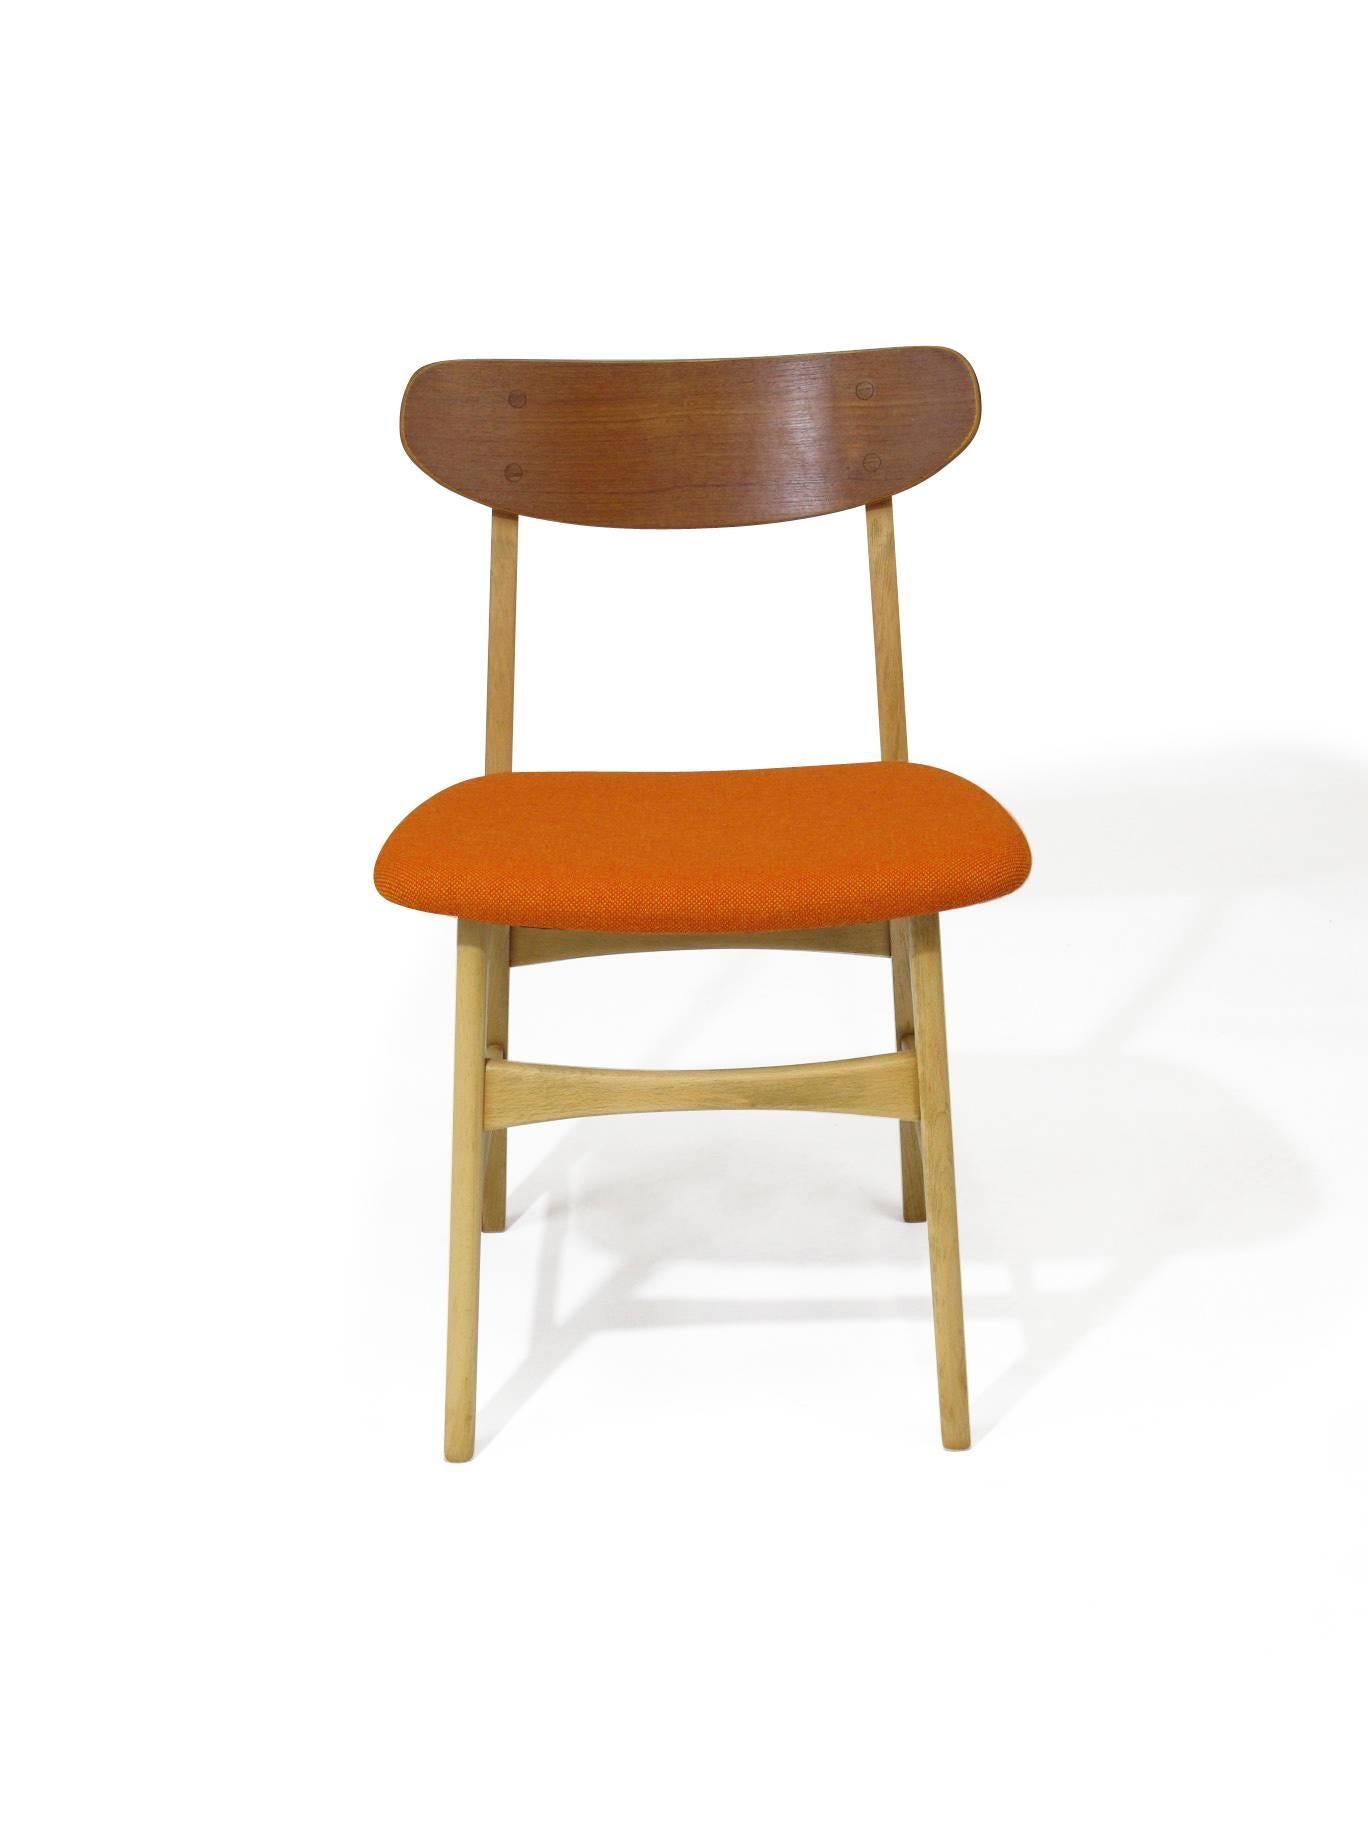 20th Century Basic Danish Teak and Beech Dining Chairs with New Orange Seats